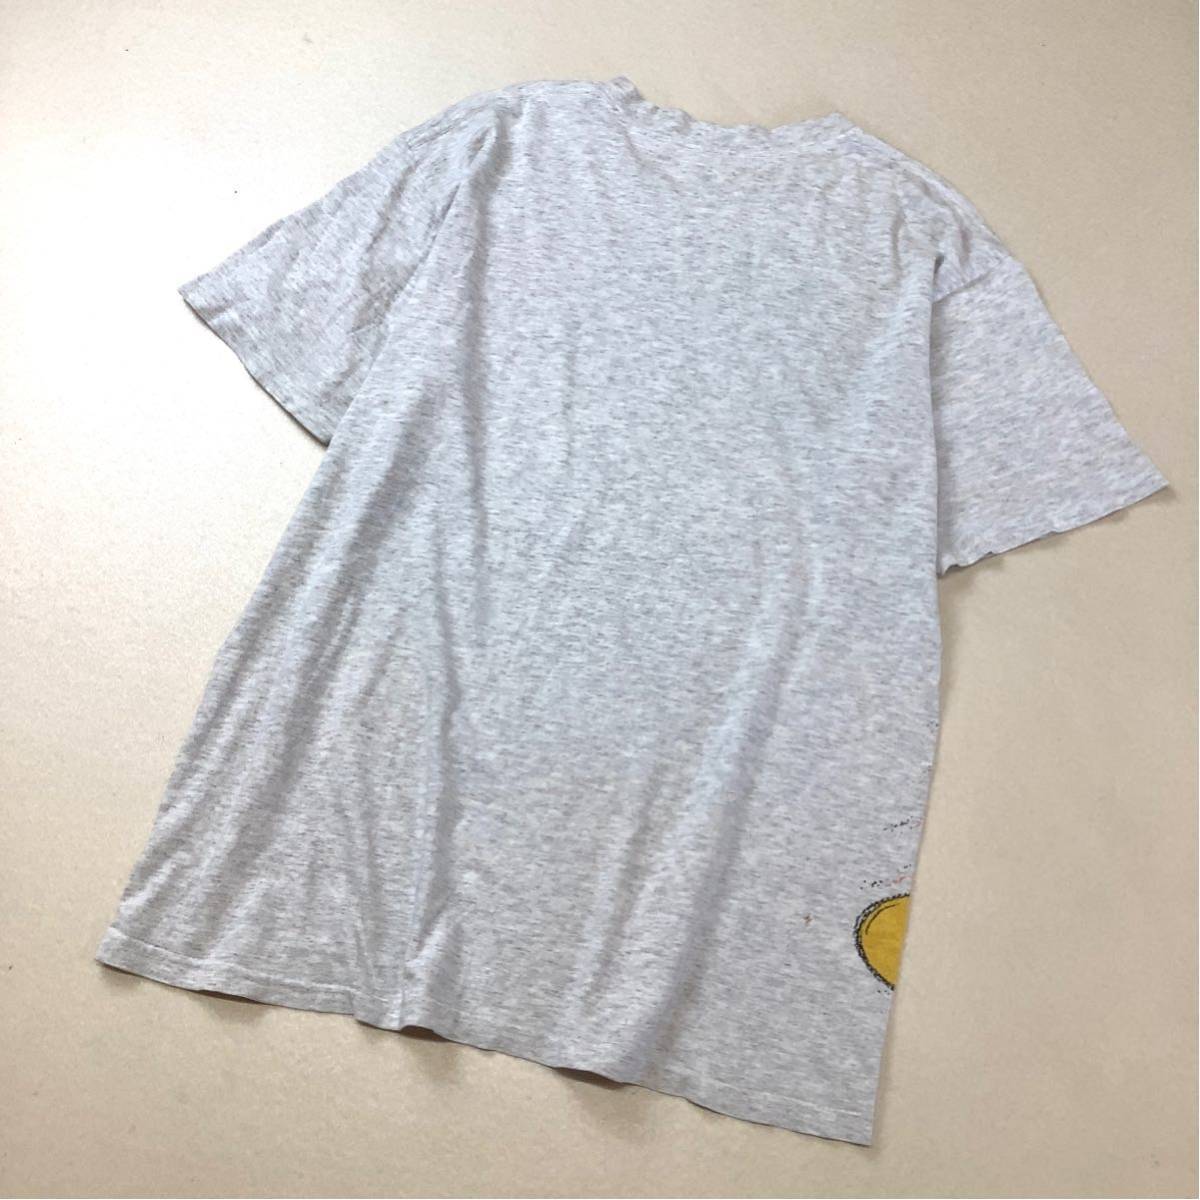 90‘s USA製 Disney オールドディズニー ハリウッドミッキー オーバーロゴ 半袖Tシャツ メンズ XL相当 霜降りグレー 丸胴_画像2